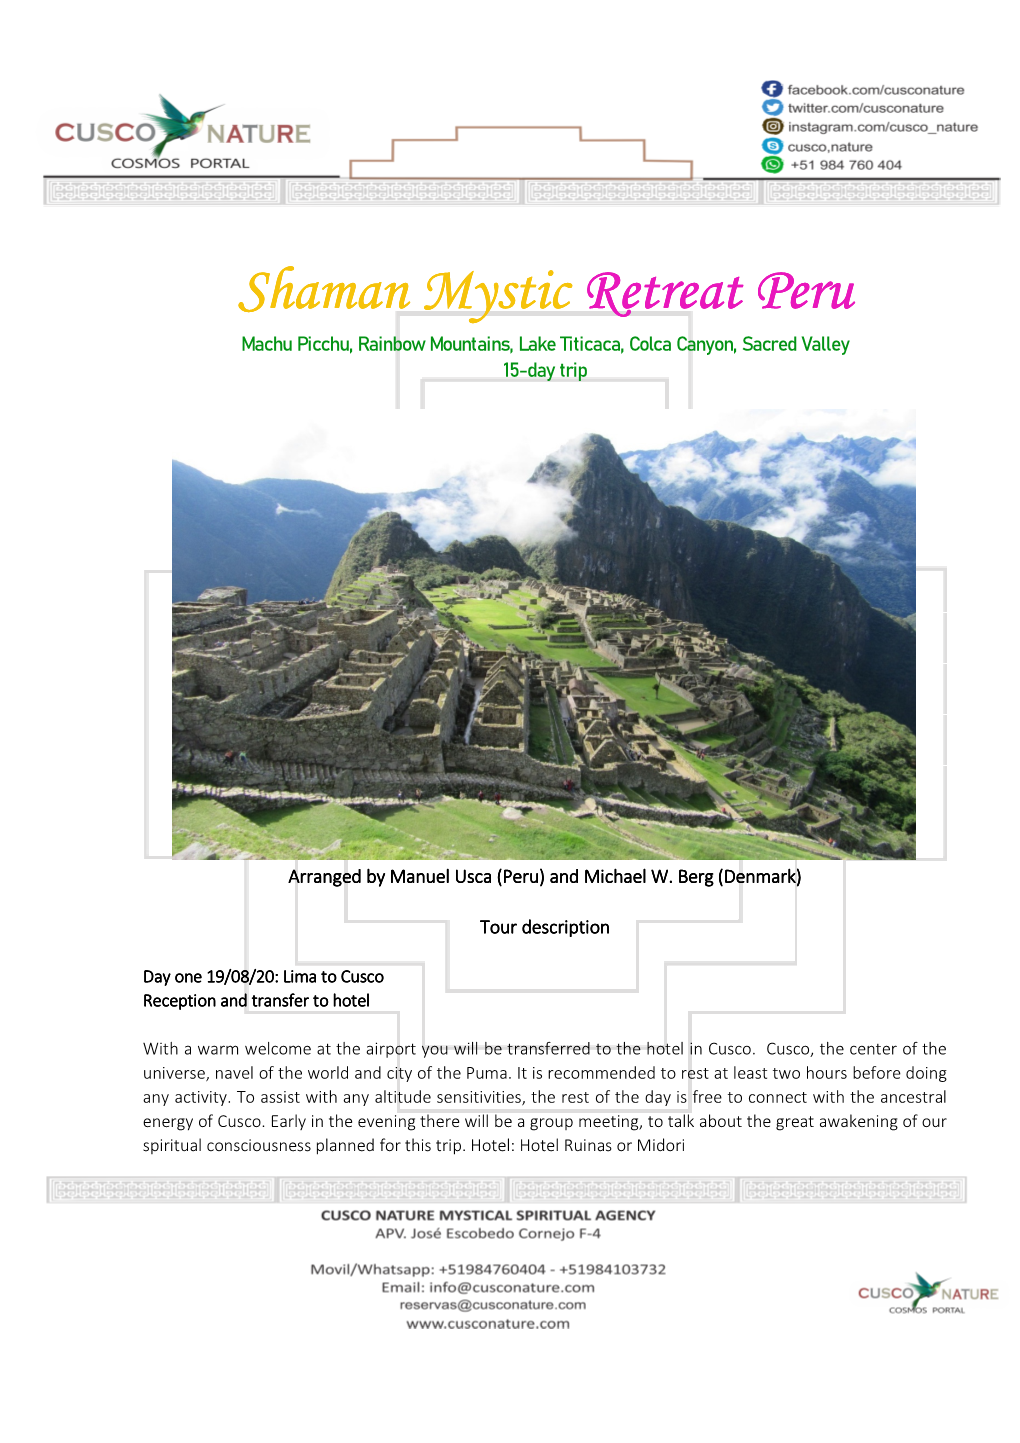 Shaman Mystic Retreat Peru Machu Picchu, Rainbow Mountains, Lake Titicaca, Colca Canyon, Sacred Valley 15-Day Trip